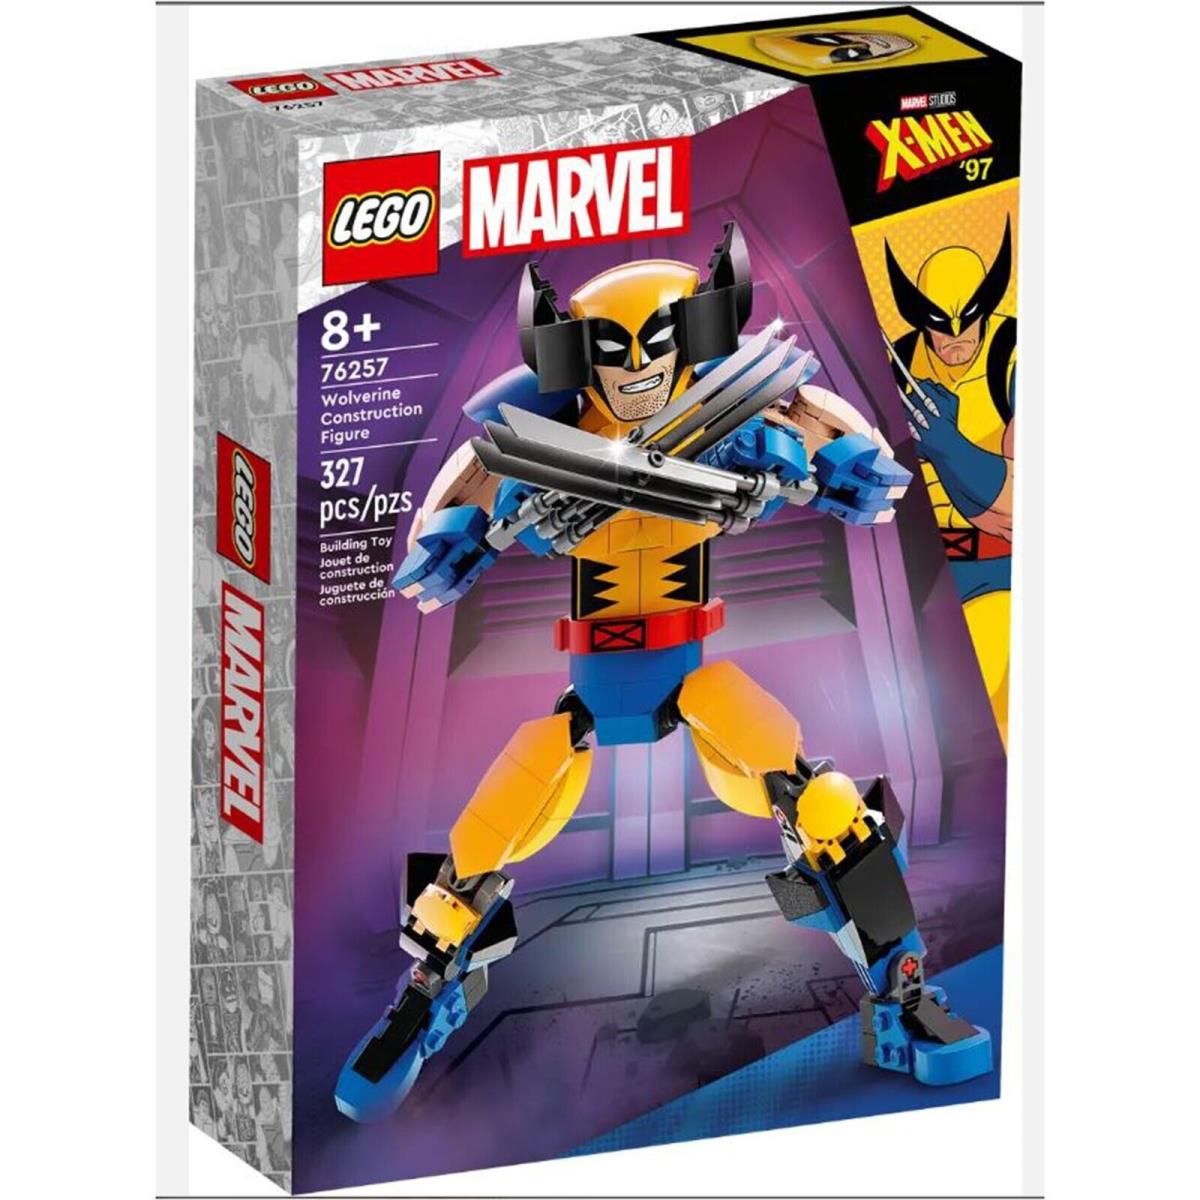 Lego Marvel Wolverine Construction Figure Building Set 76257